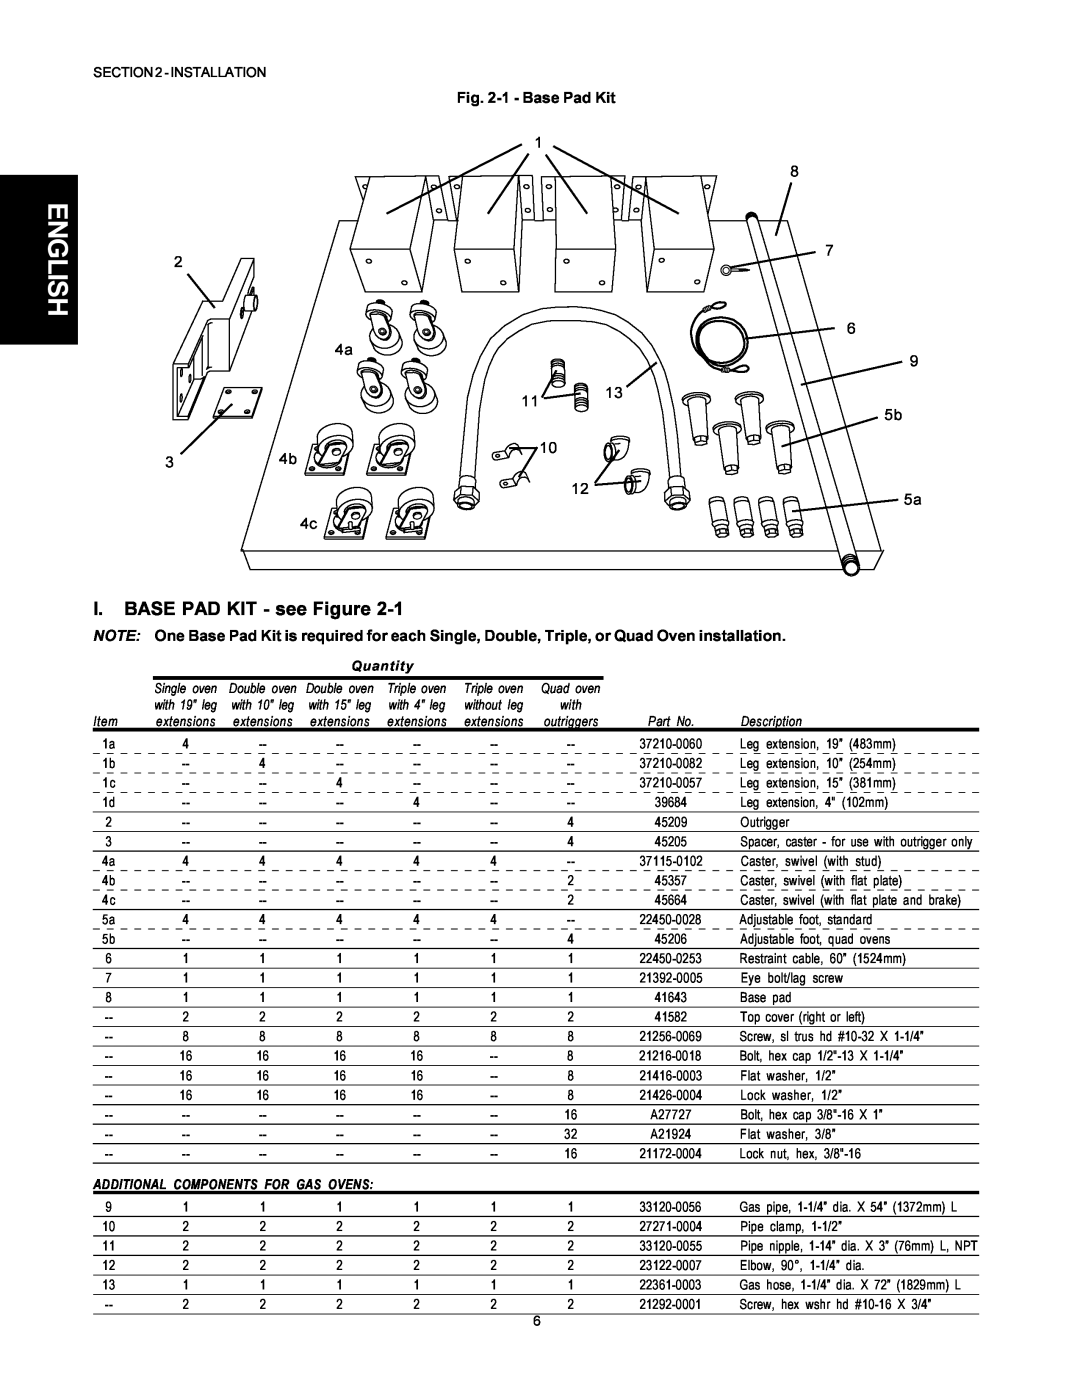 Middleby Marshall PS500 installation manual I. BASE PAD KIT - see Figure, English, 1 - Base Pad Kit, Quantity 